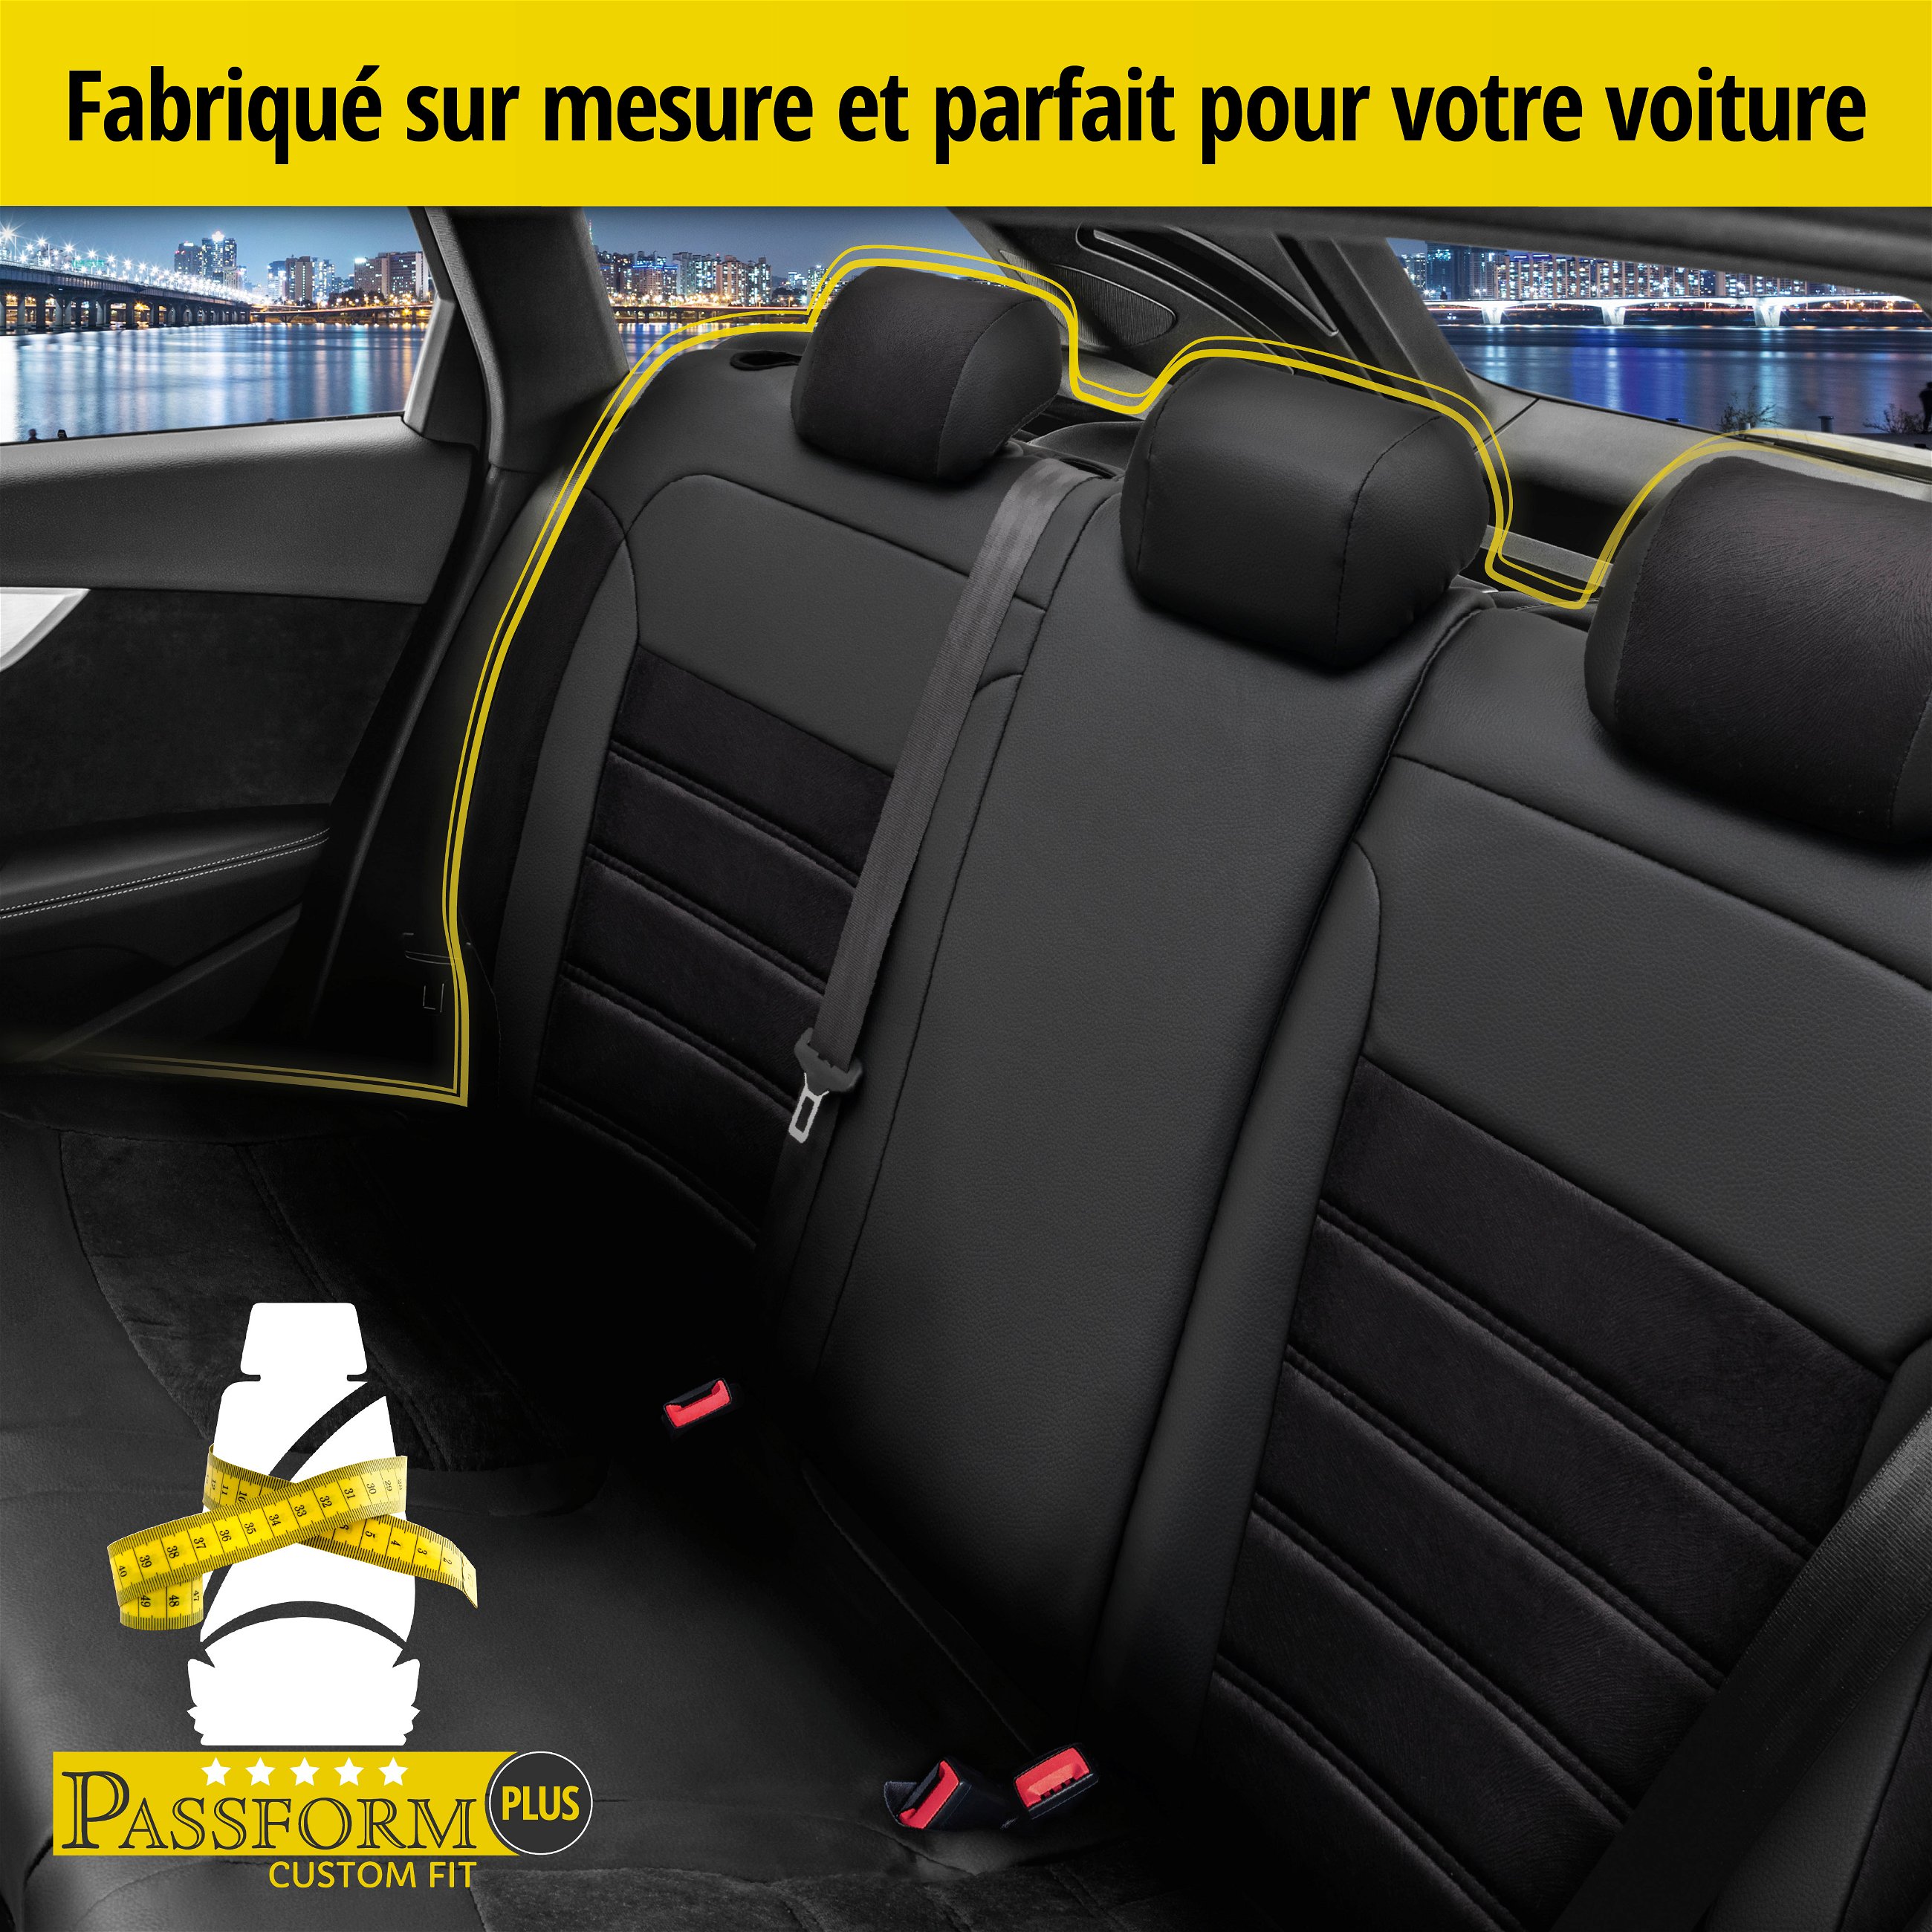 Housse de siège Bari pour Renault Kadjar (HA, HL) 06/2015-auj., 1 housse de siège arrière pour sièges normaux